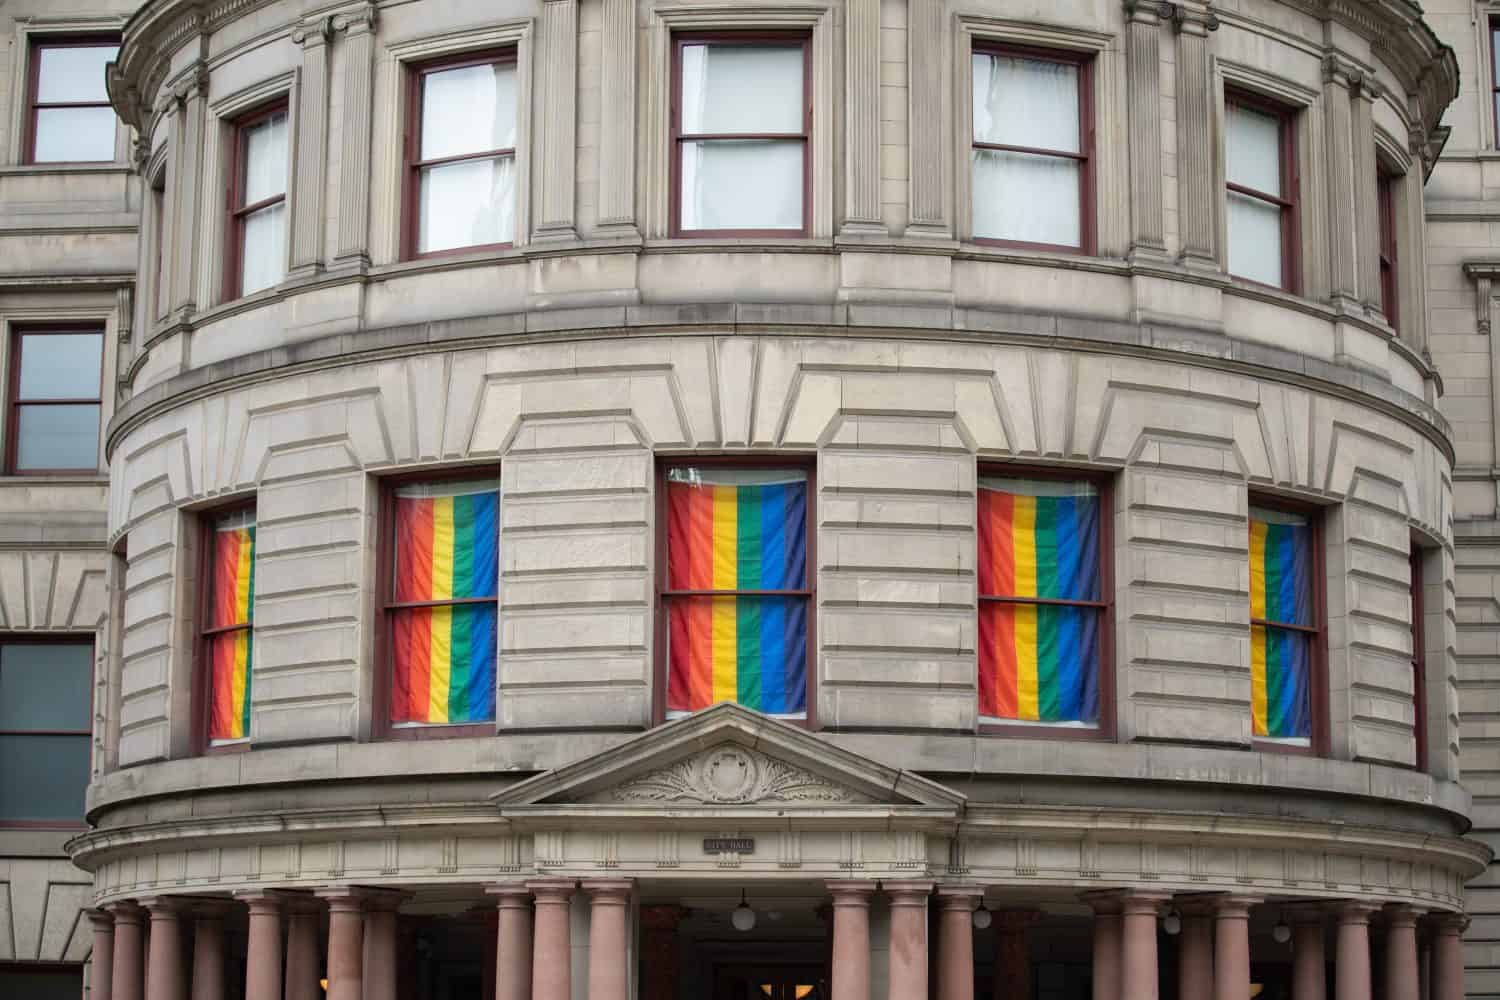 Portland city hall building with windows draped in LGBTQ rainbow flag.